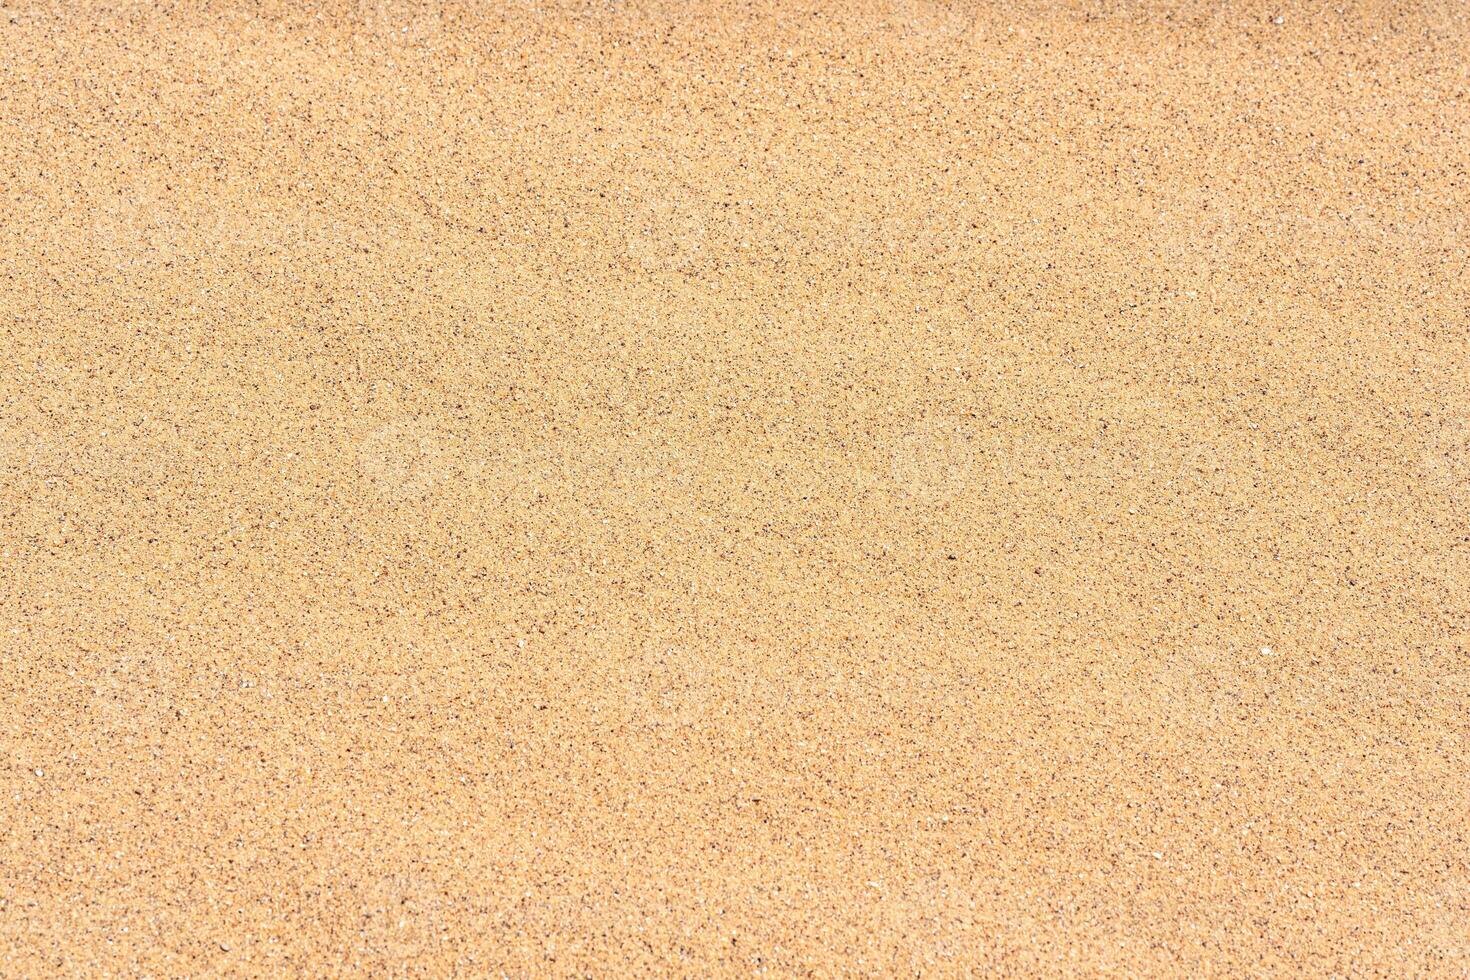 fundo - amarelo areia deserto fechar-se foto